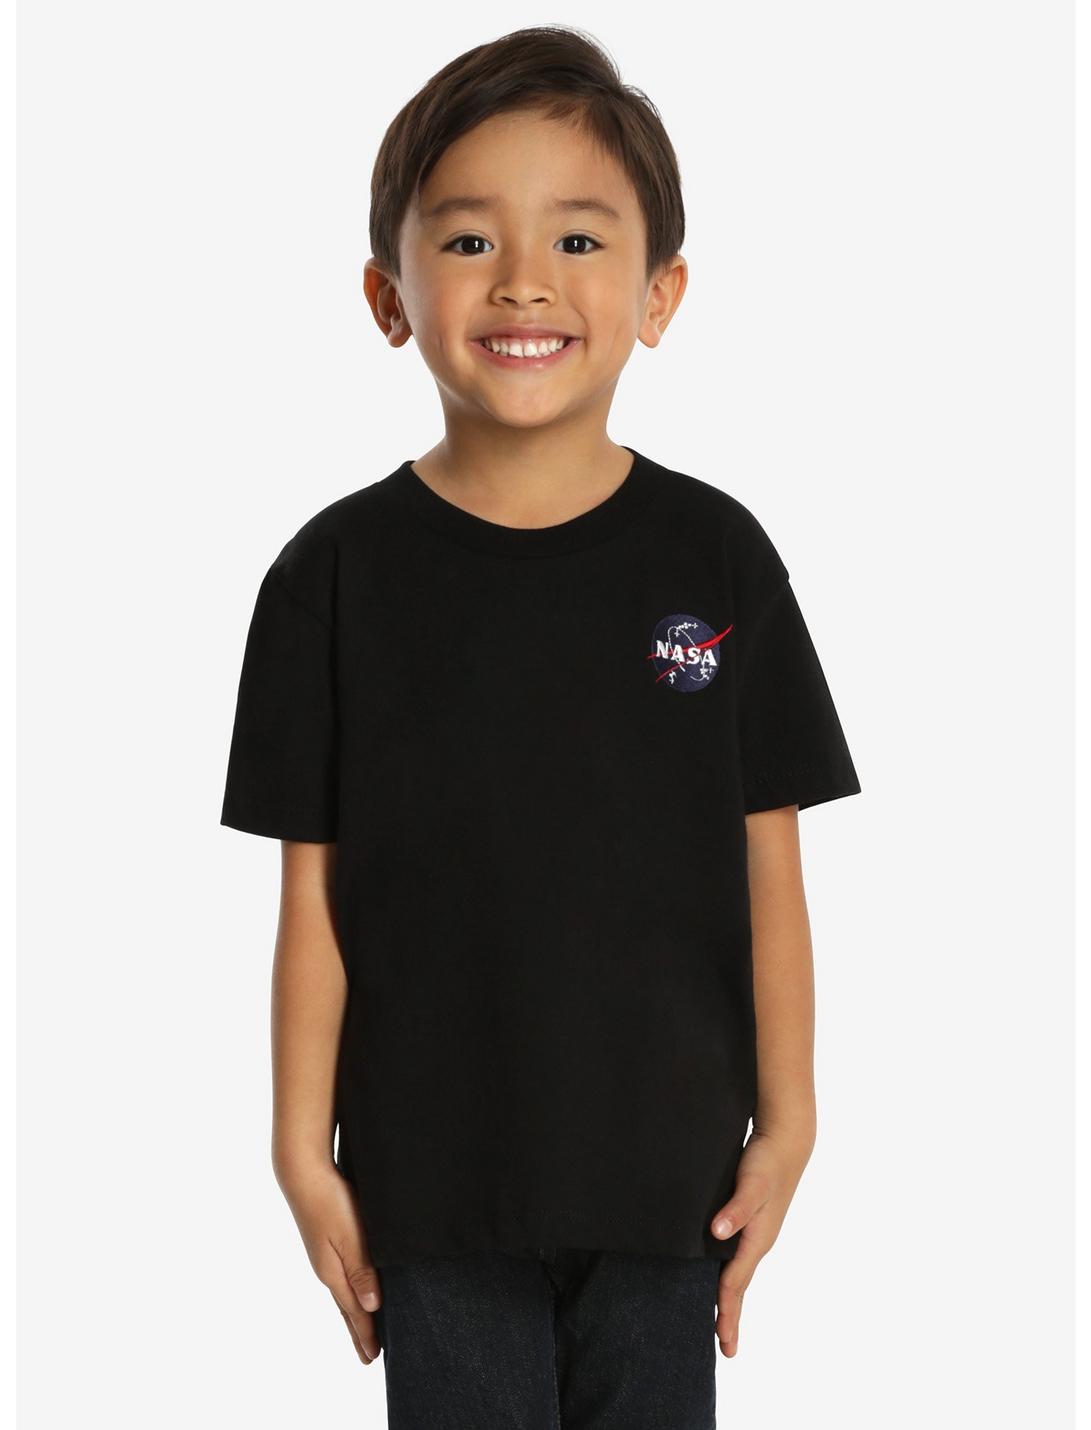 NASA Patch Toddler Tee, BLACK, hi-res